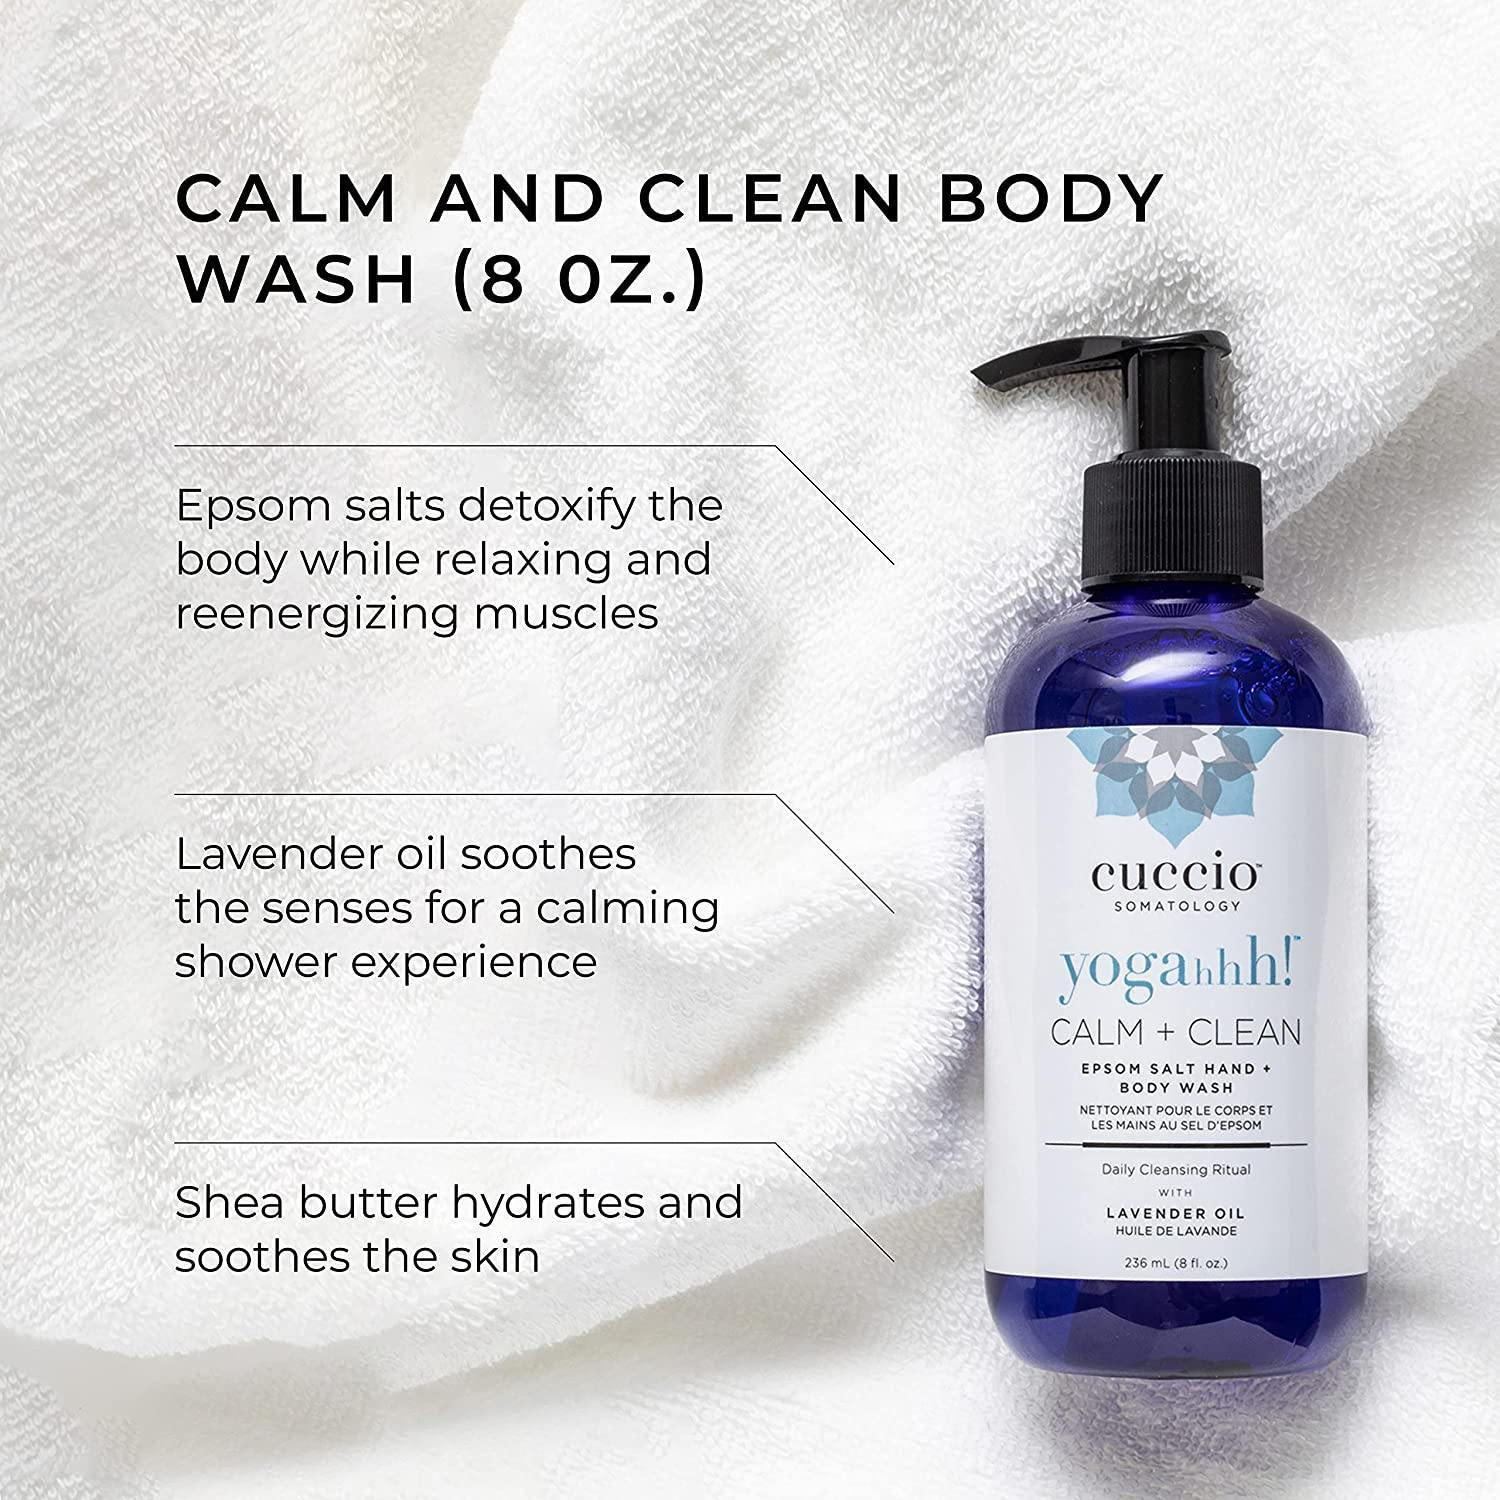 Cuccio Somatology - Calm + Clean Body wash 8oz - Sanida Beauty